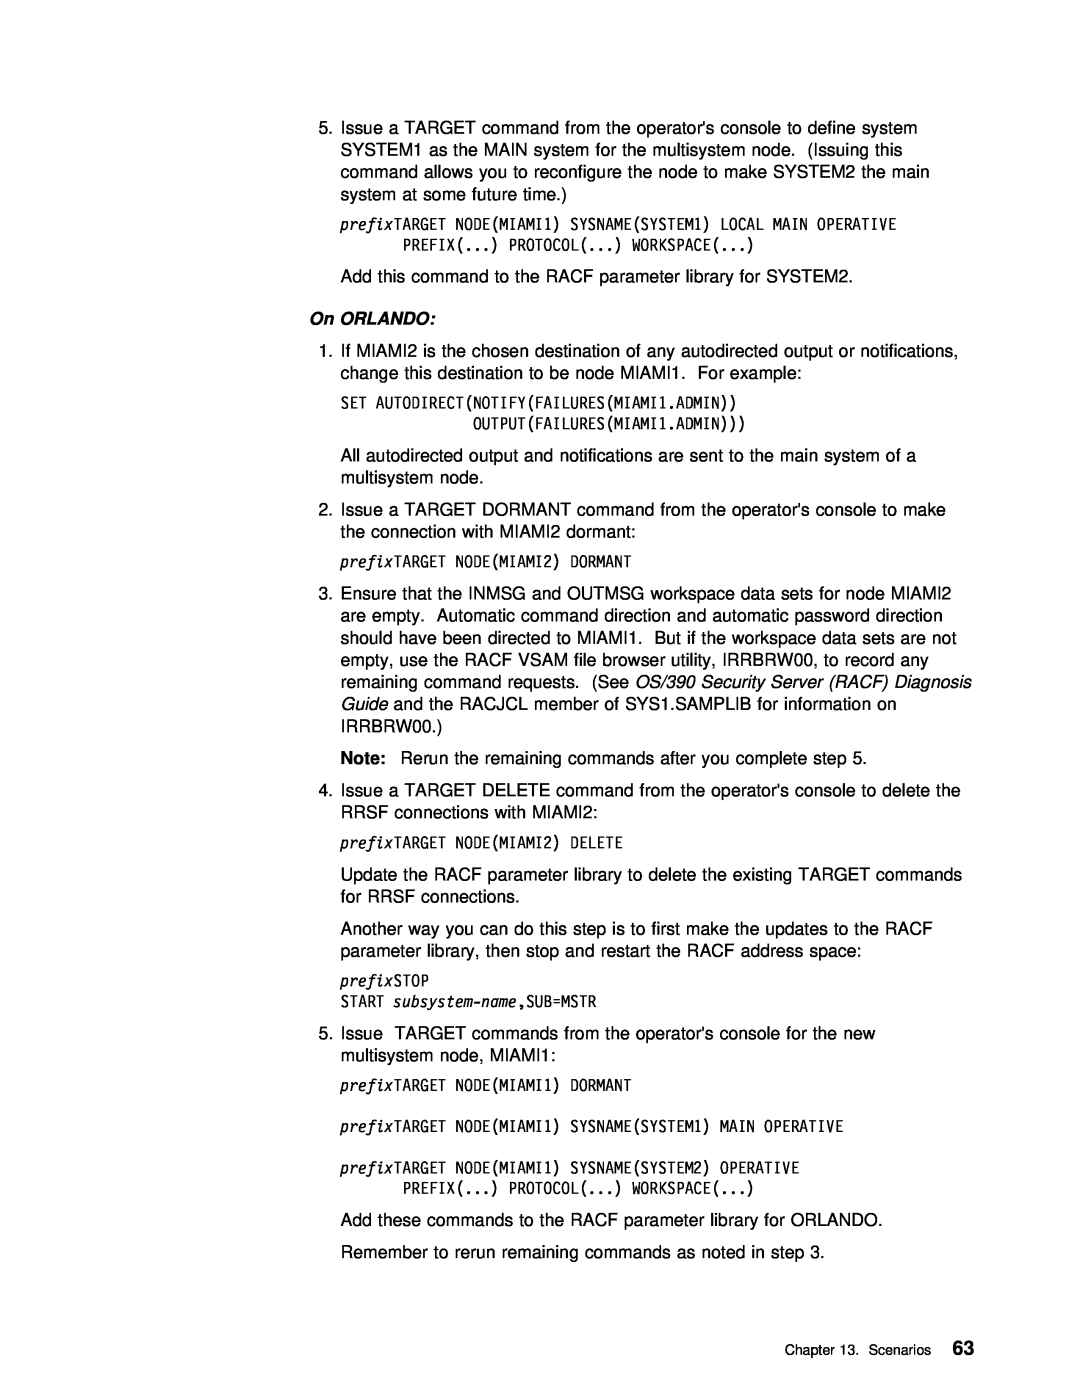 IBM GC28-1920-01 manual RACF Diagnosis, Security, Server, On ORLANDO, Delete 